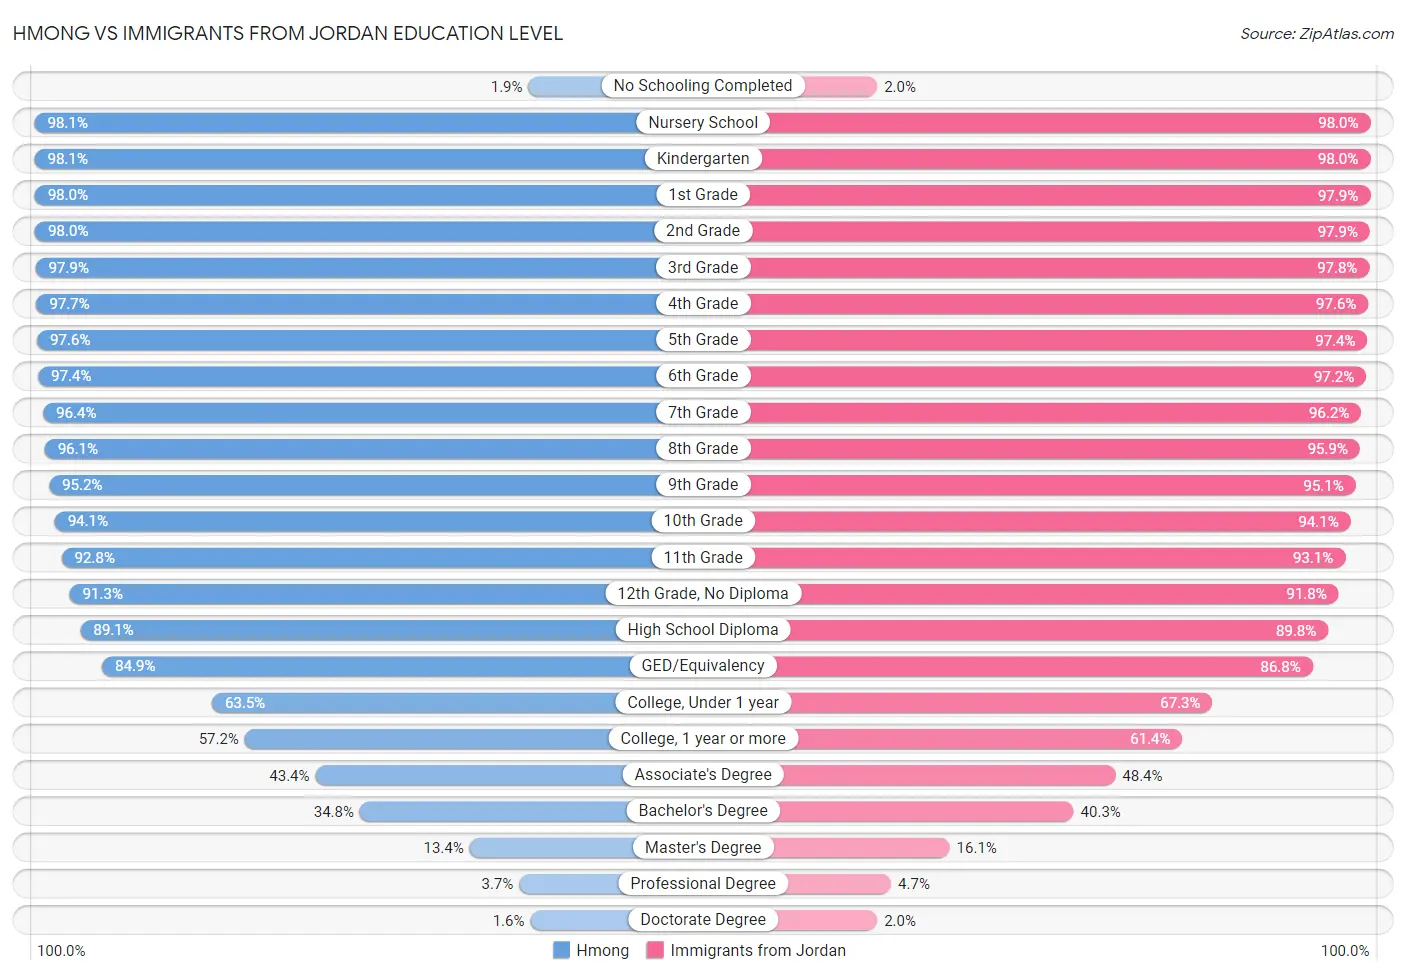 Hmong vs Immigrants from Jordan Education Level